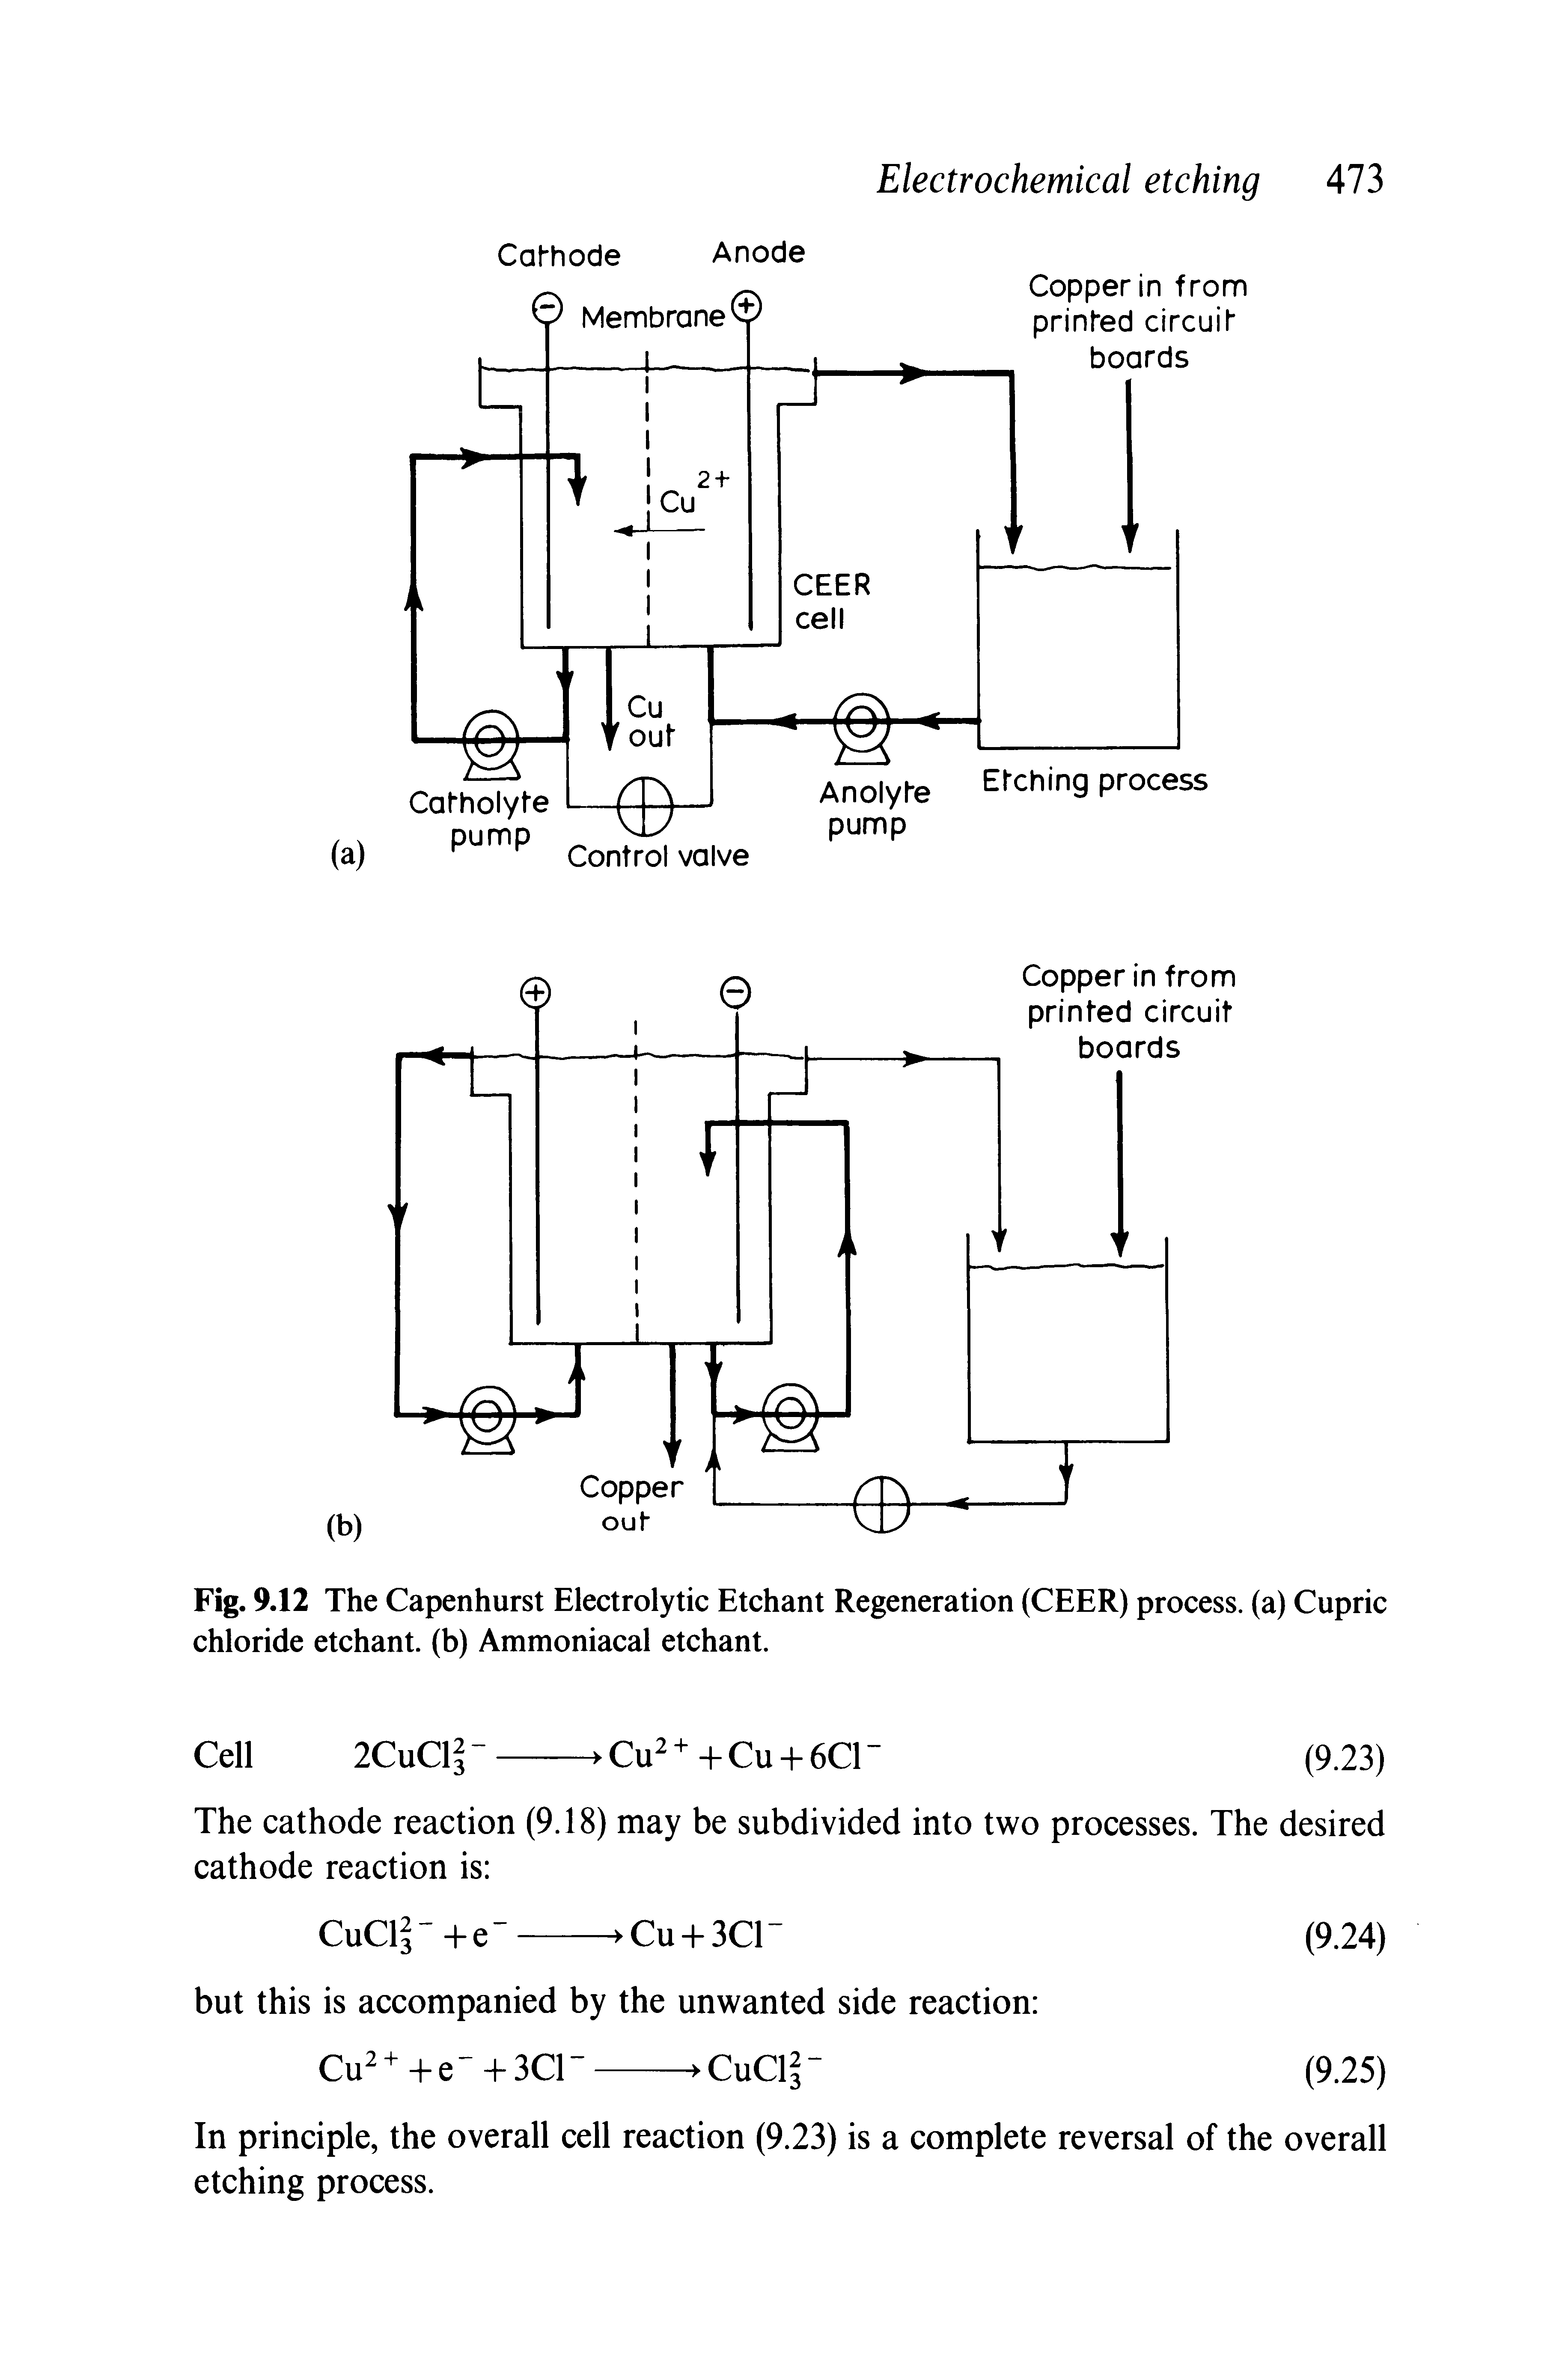 Fig. 9.12 The Capenhurst Electrolytic Etchant Regeneration (CEER) process, (a) Cupric chloride etchant, (b) Ammoniacal etchant.